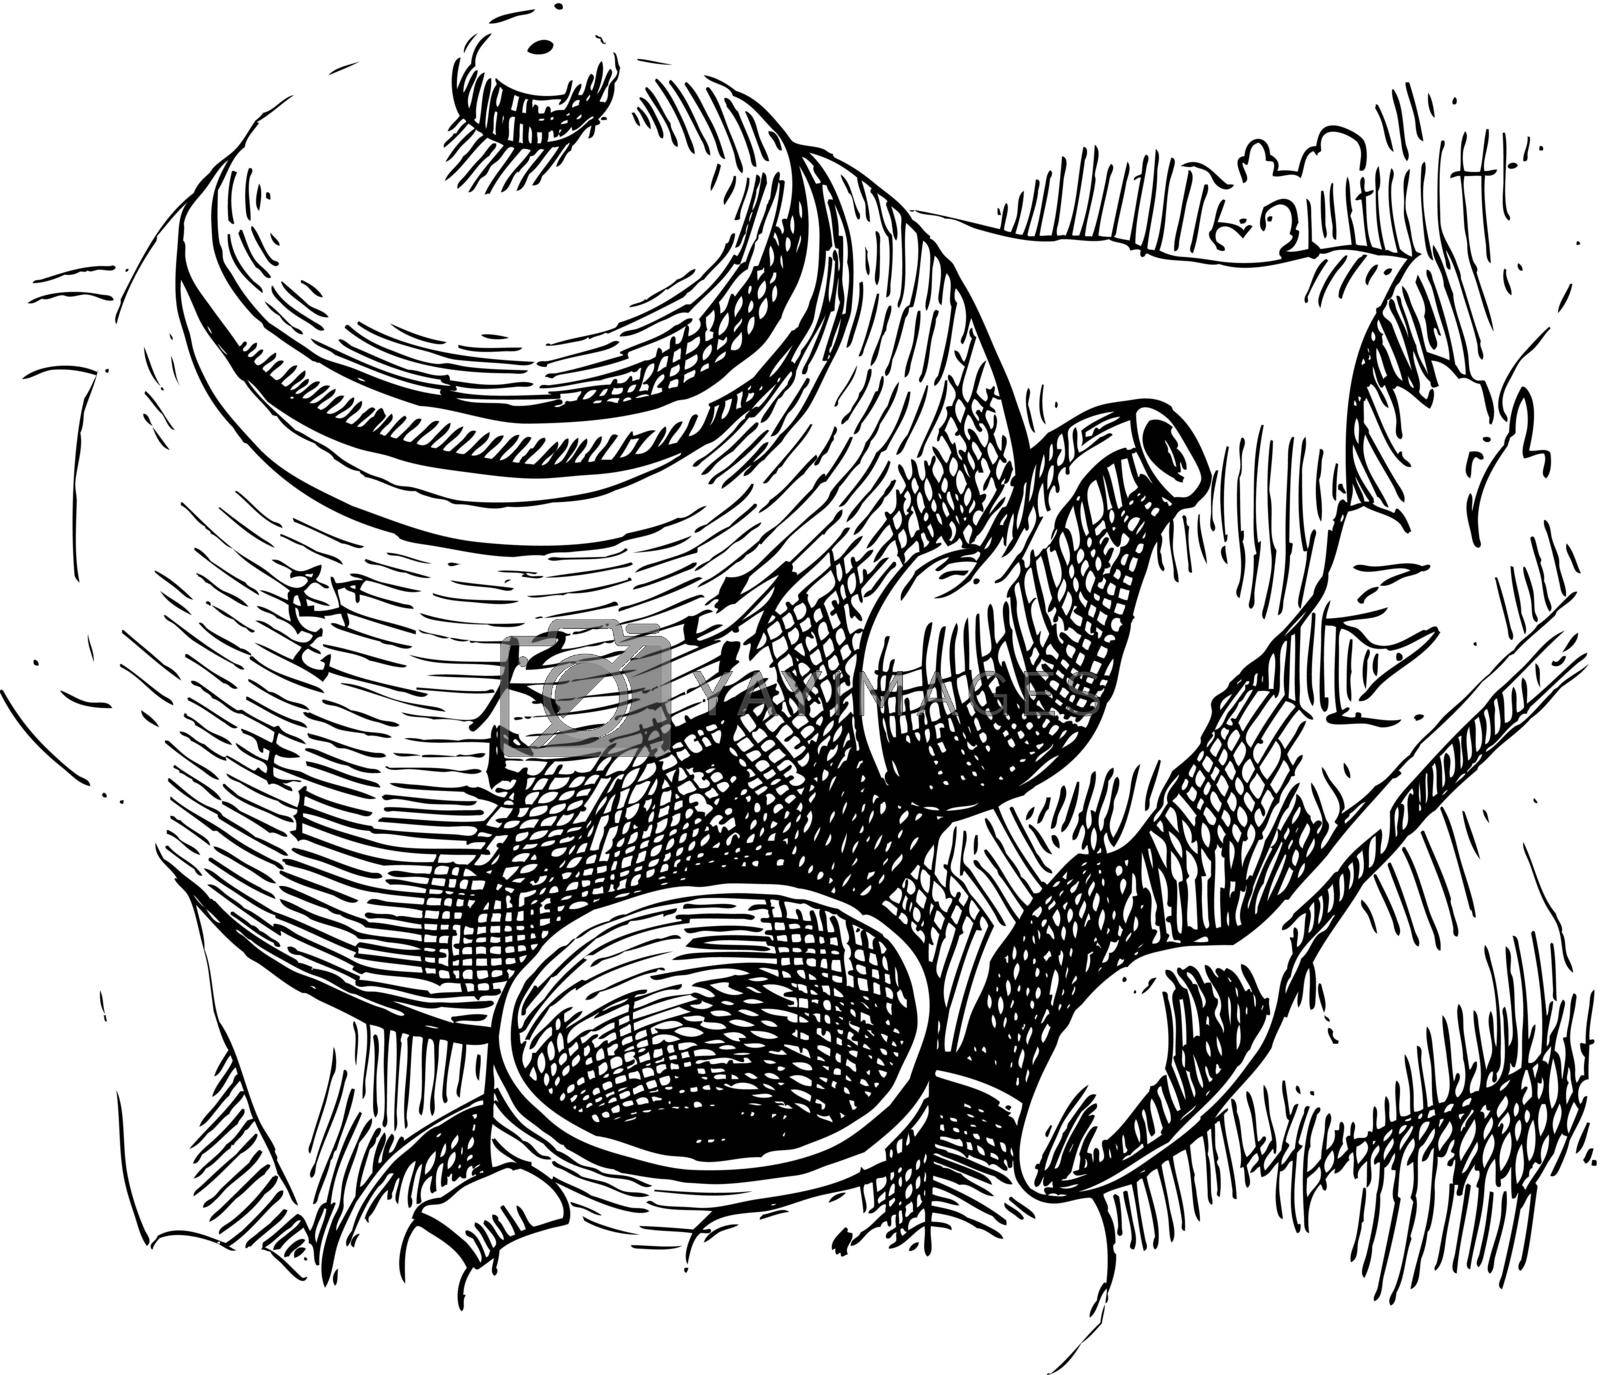 Royalty free image of Still life with tea pot by steshnikova